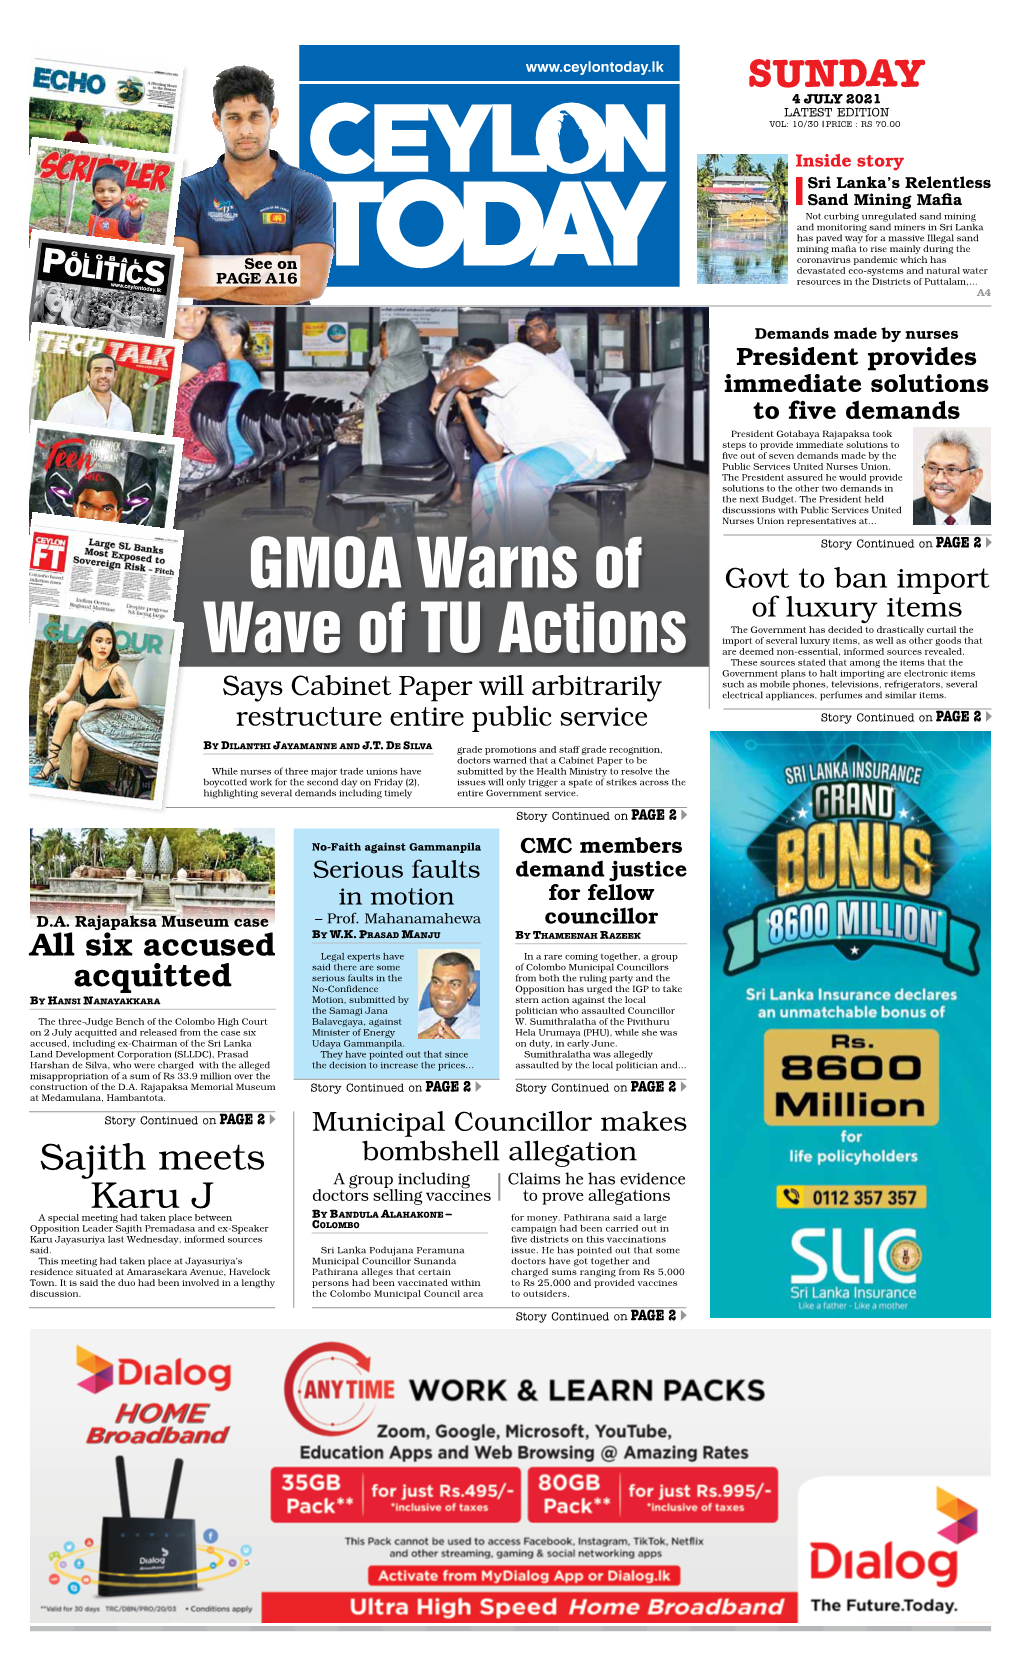 GMOA Warns of Wave of TU Actions